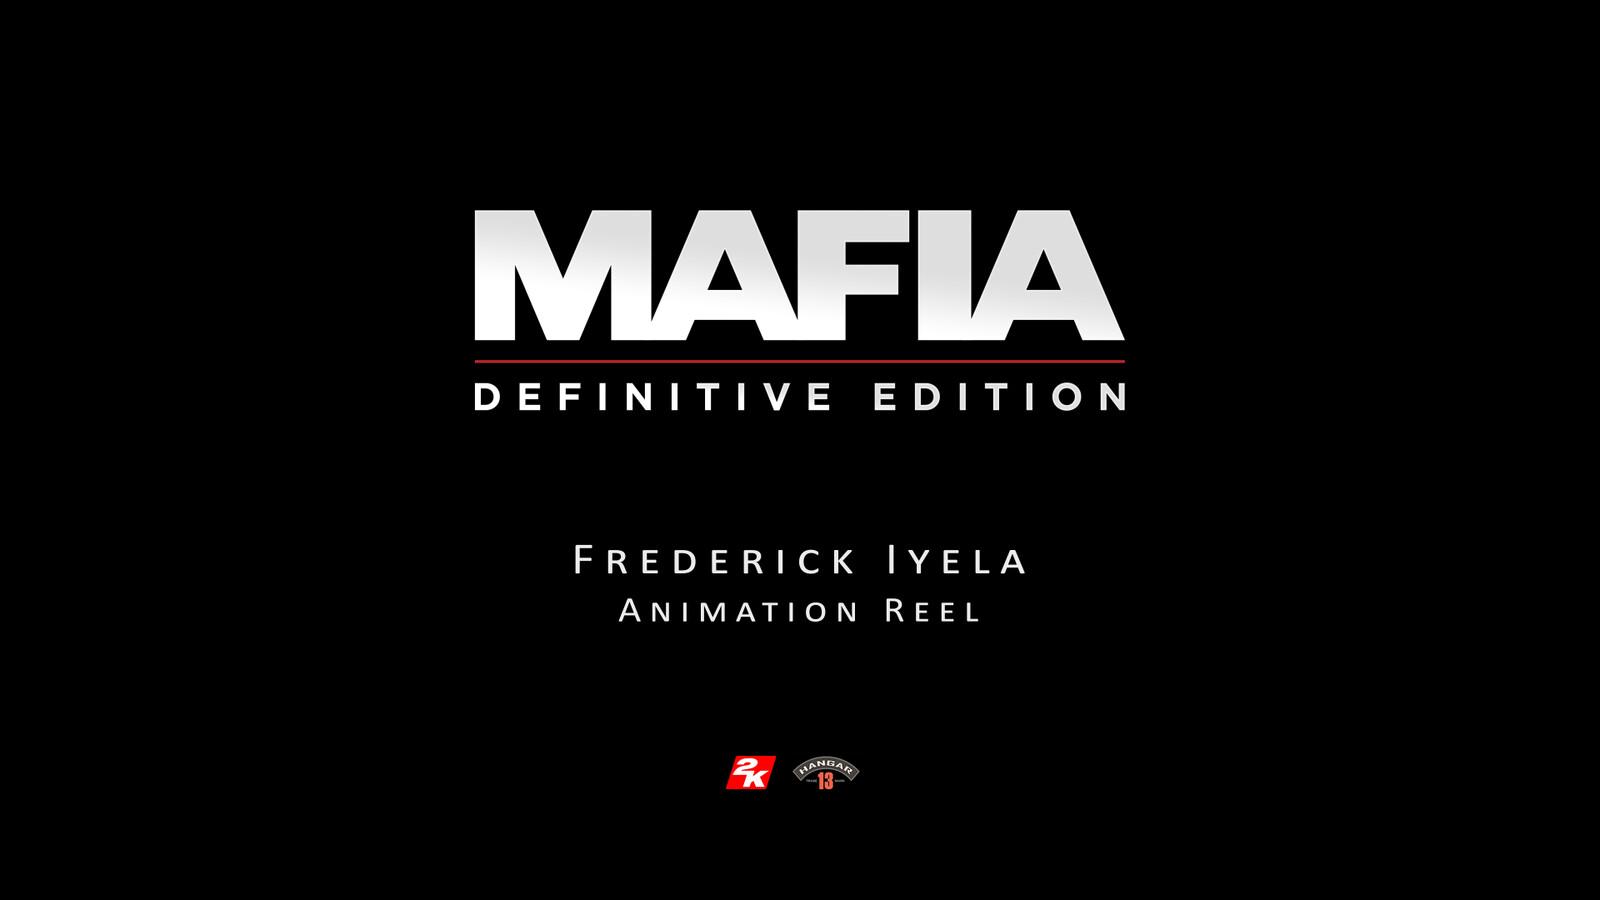 Mafia: Definitive Edition - Animation Reel